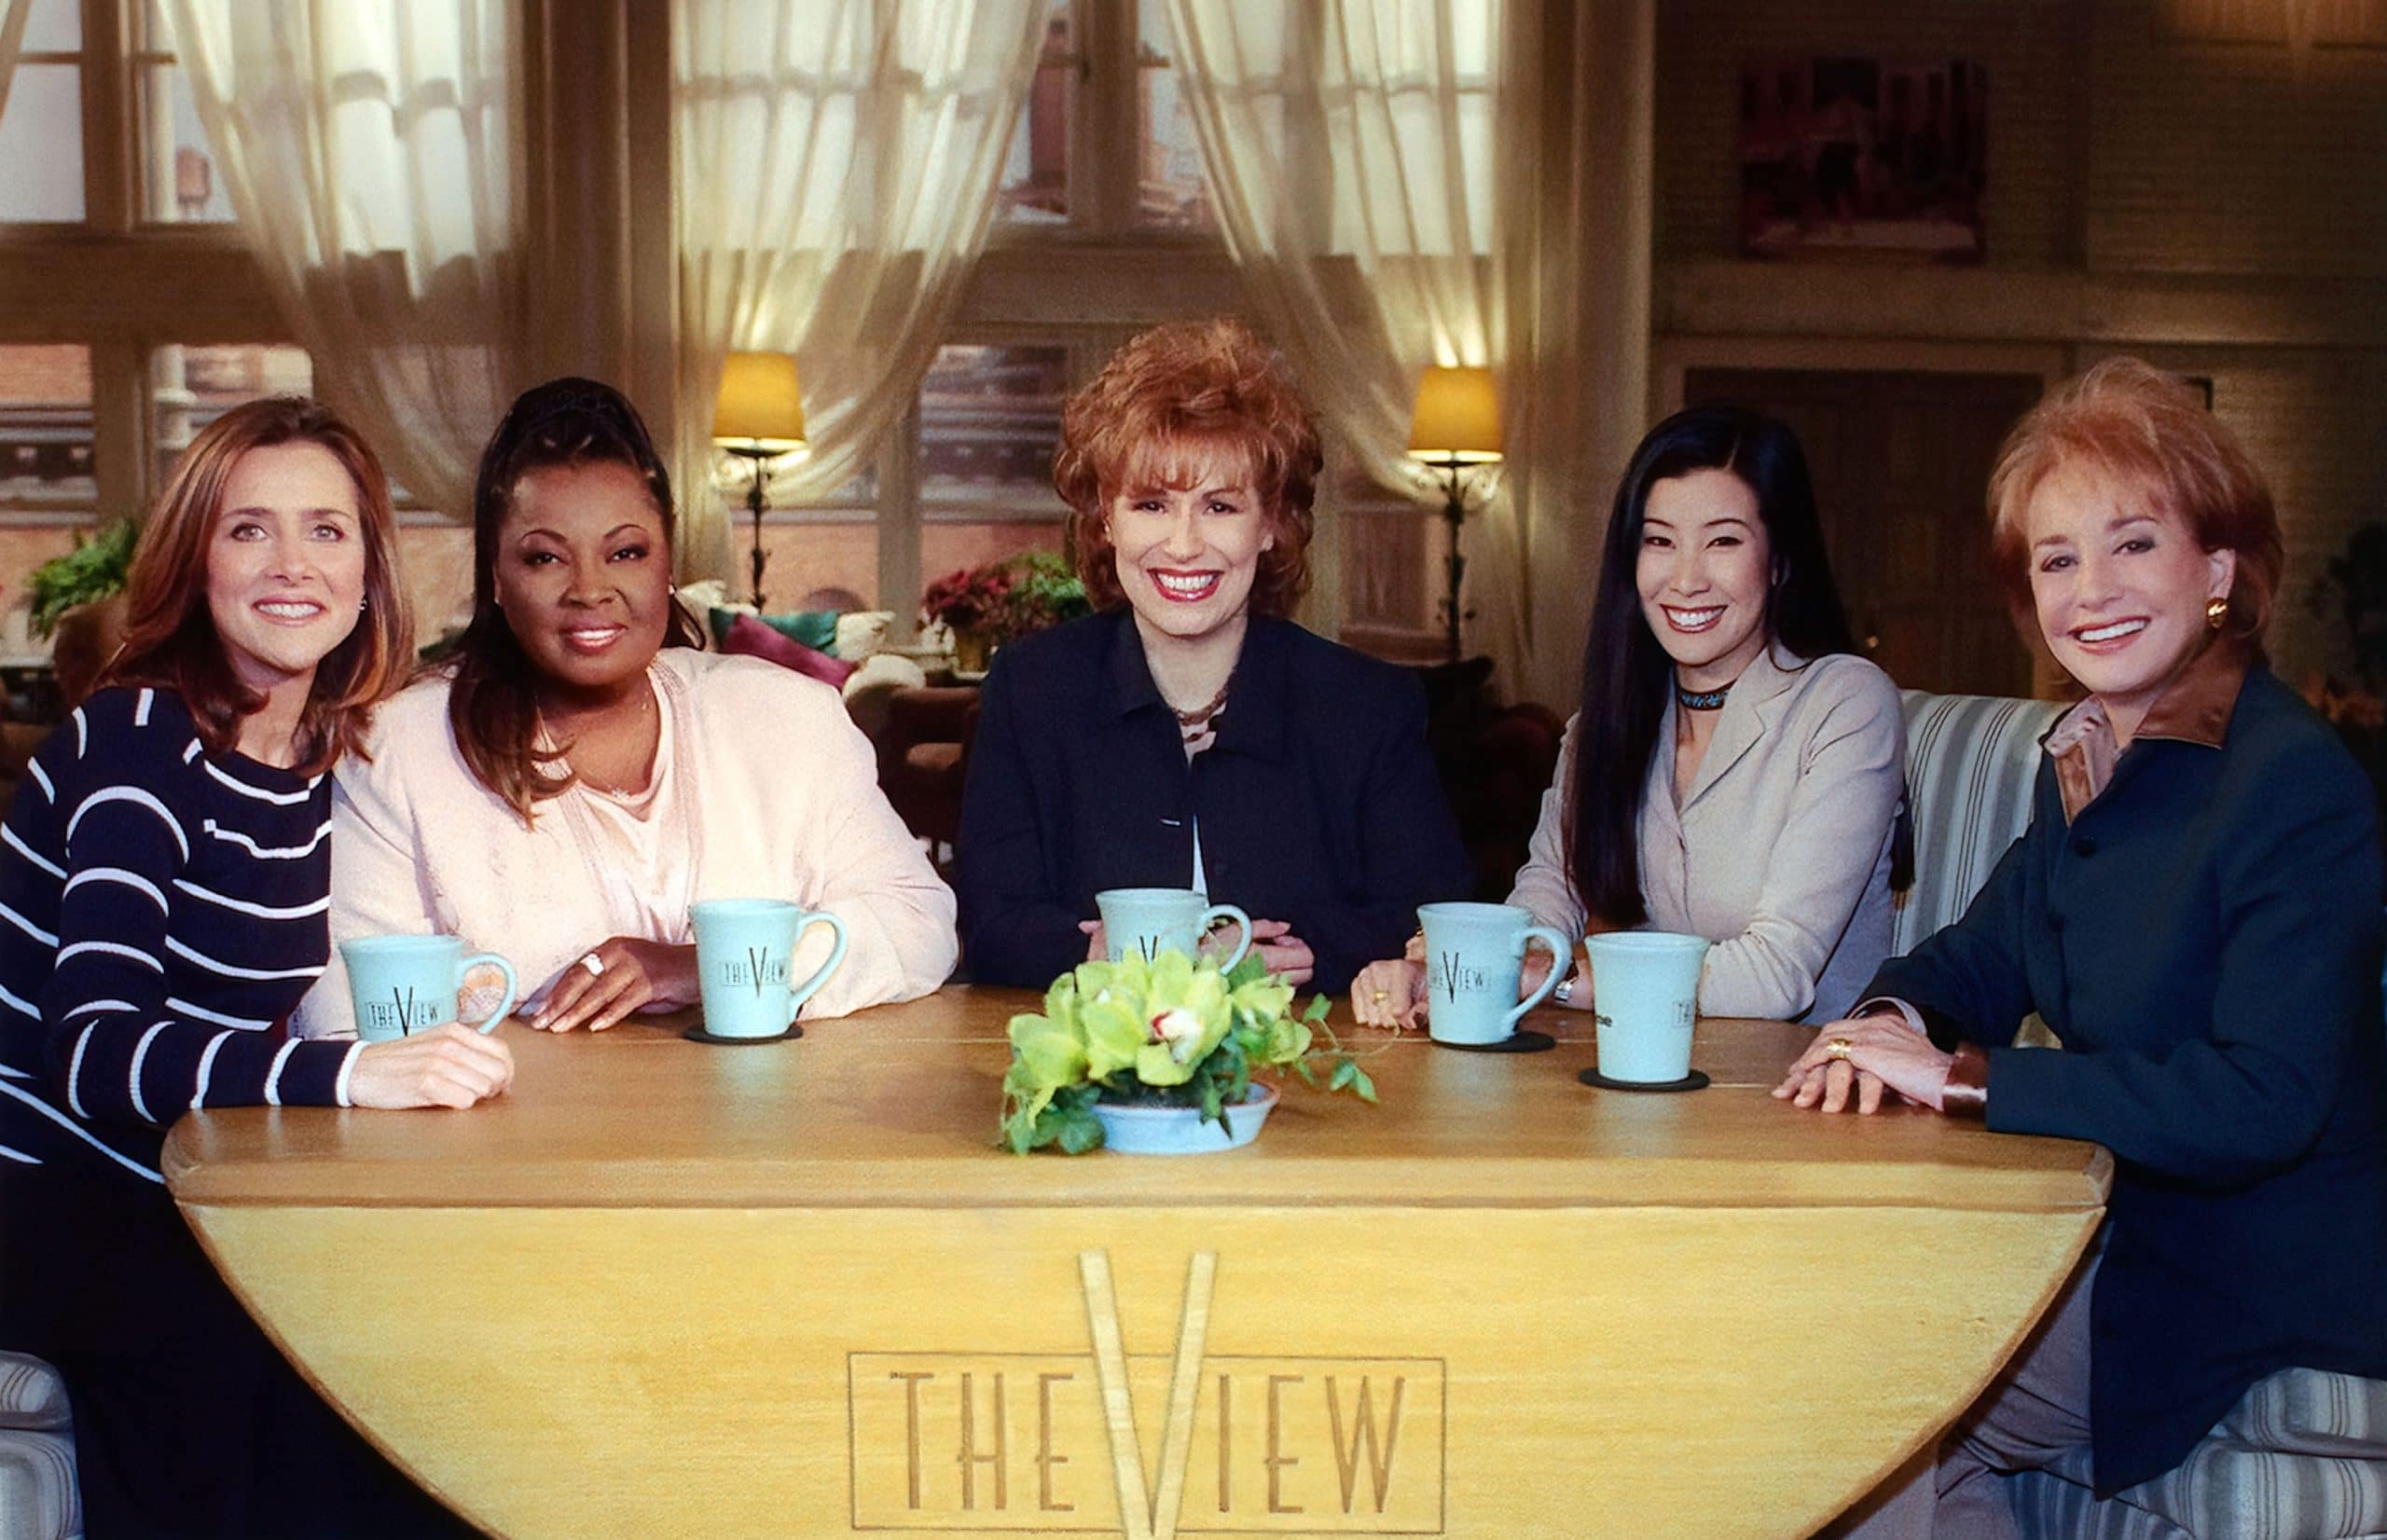 THE VIEW, from left: Meredith Vieira, Star Jones, Joy Behar, Lisa Ling, Barbara Walters, (1999),